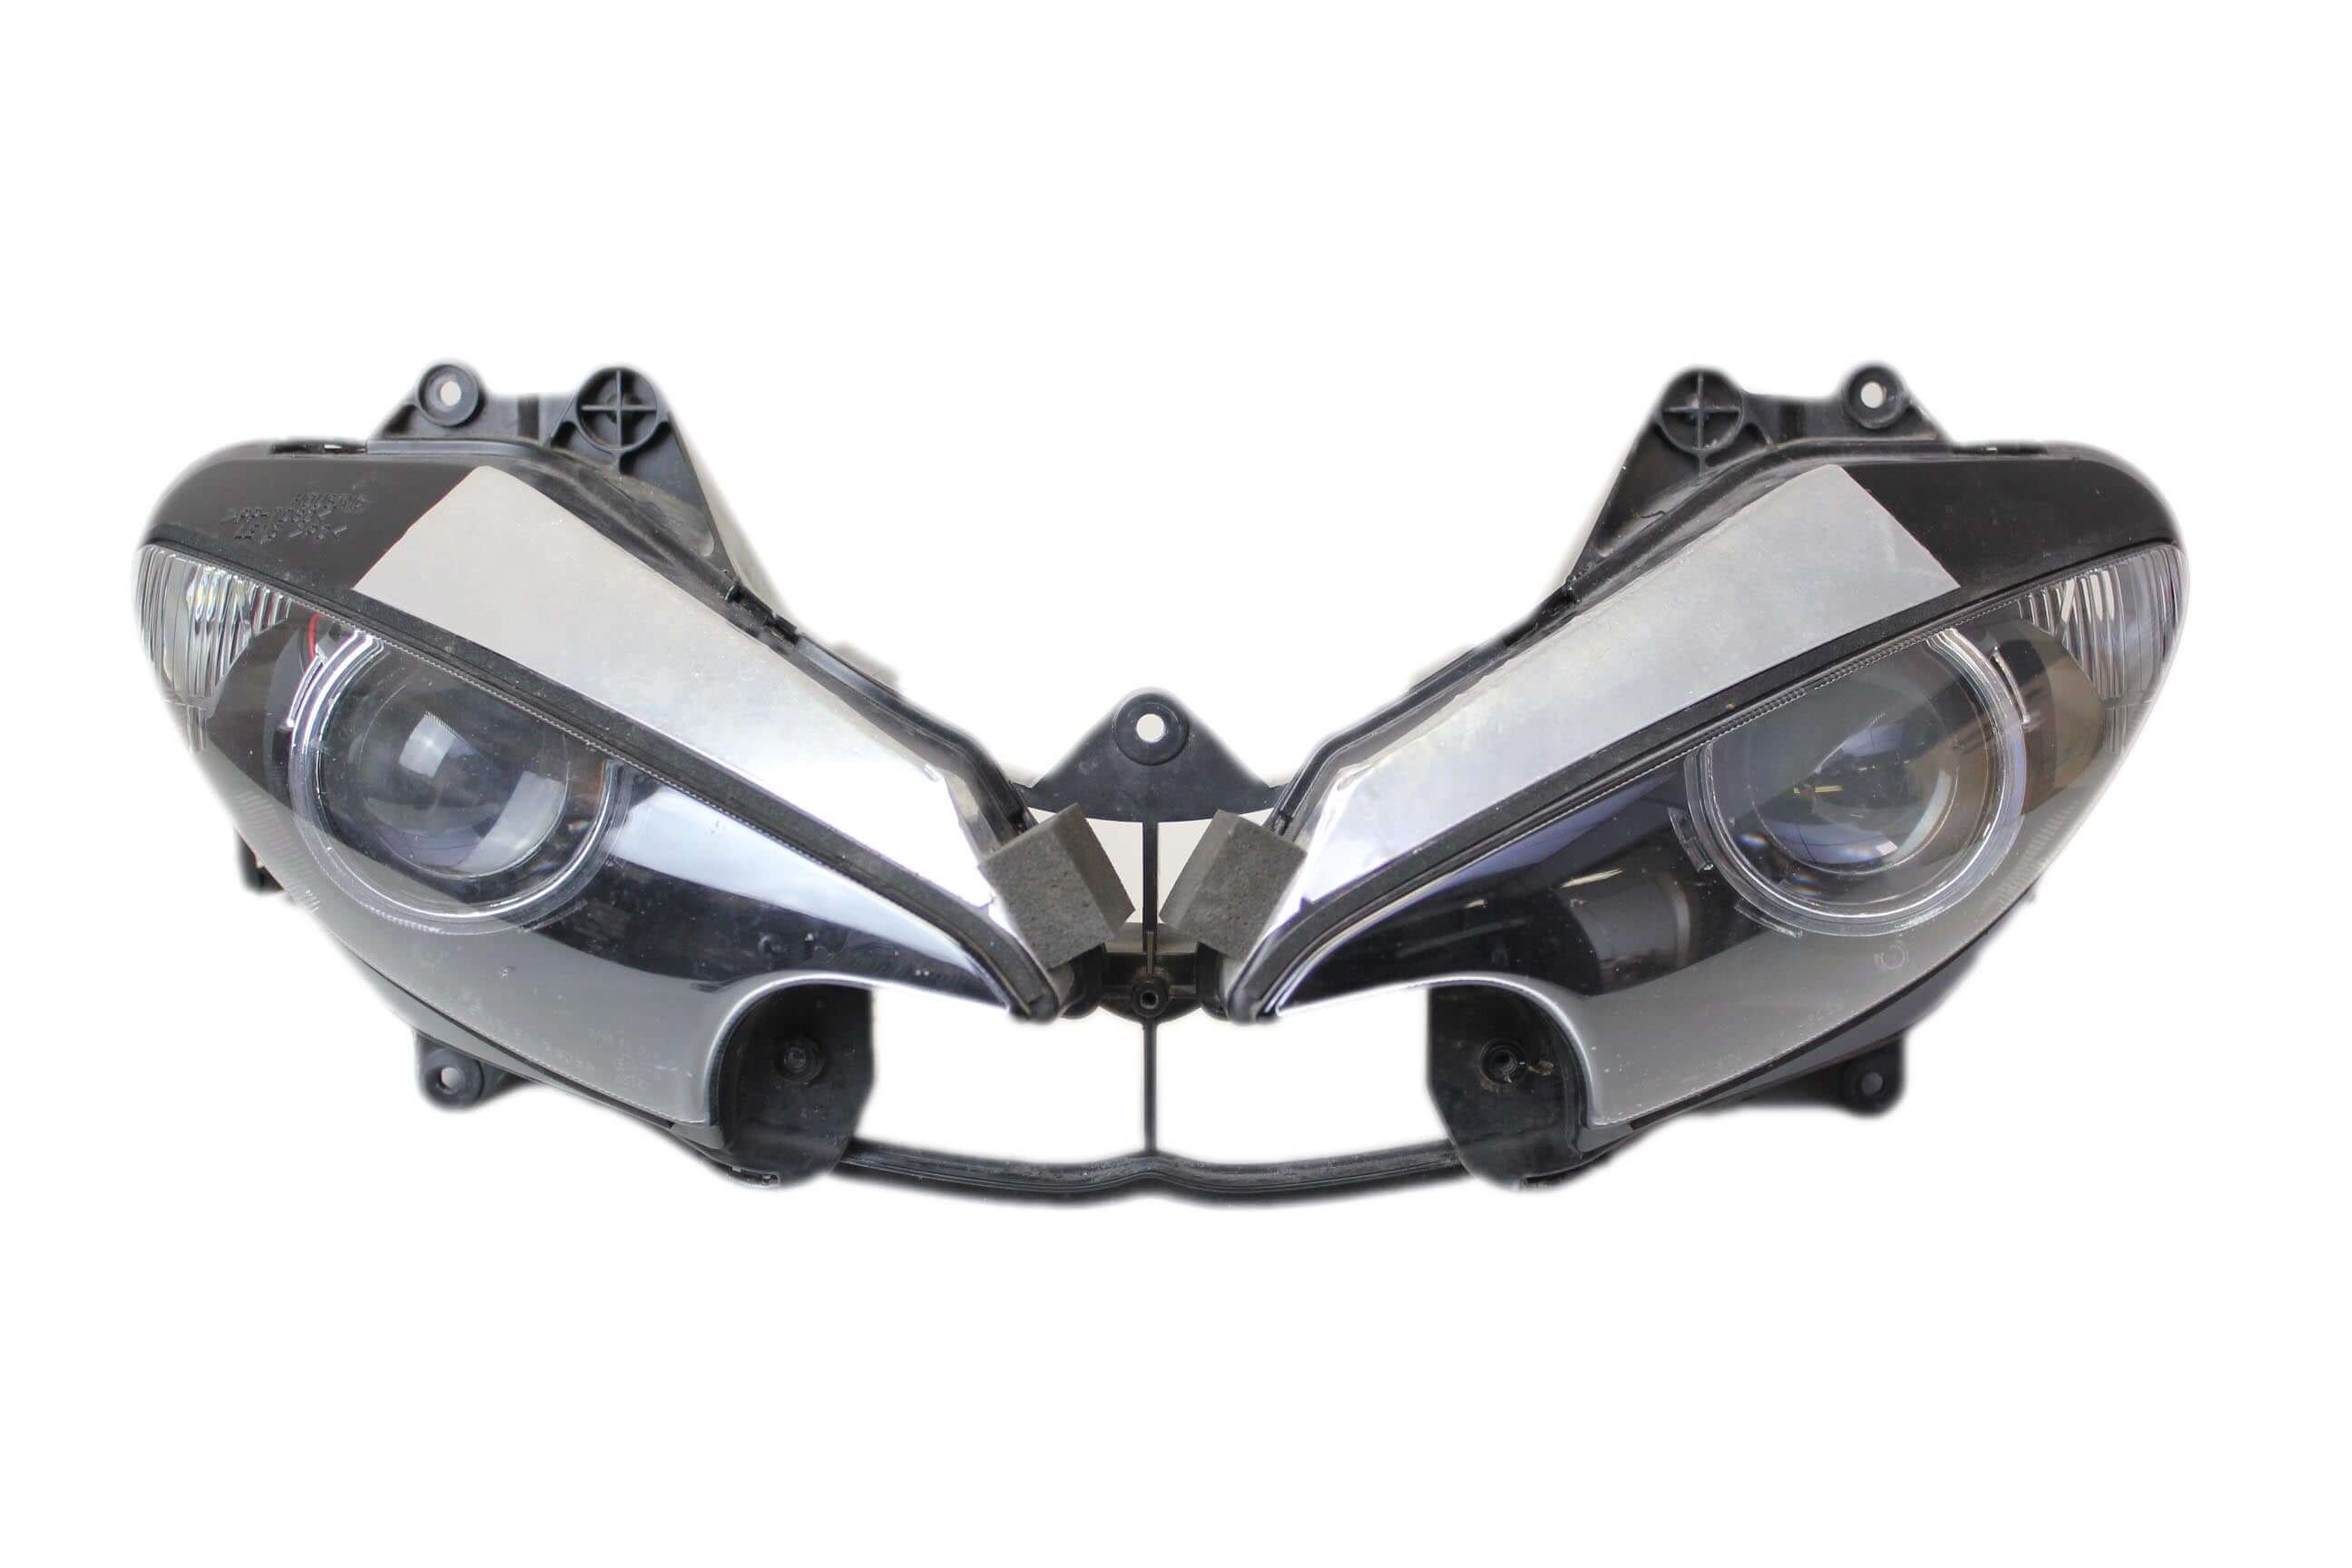 Yamaha YZF R1 bi-xenon headlight upgrade kit tutorial